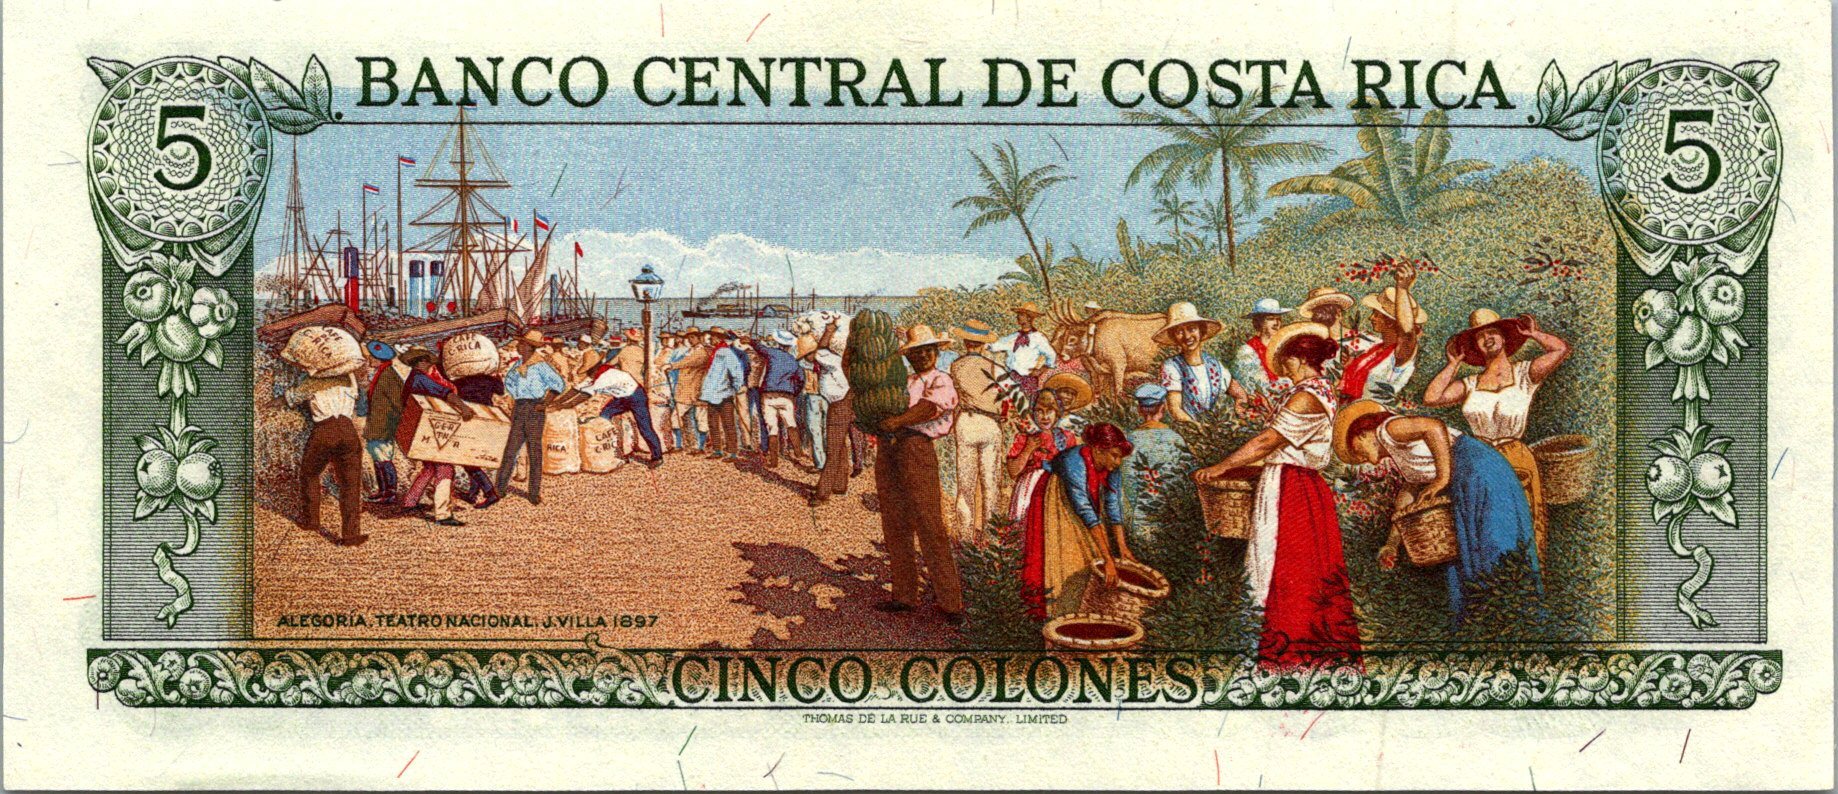 Kostarika 5 Colones 1981